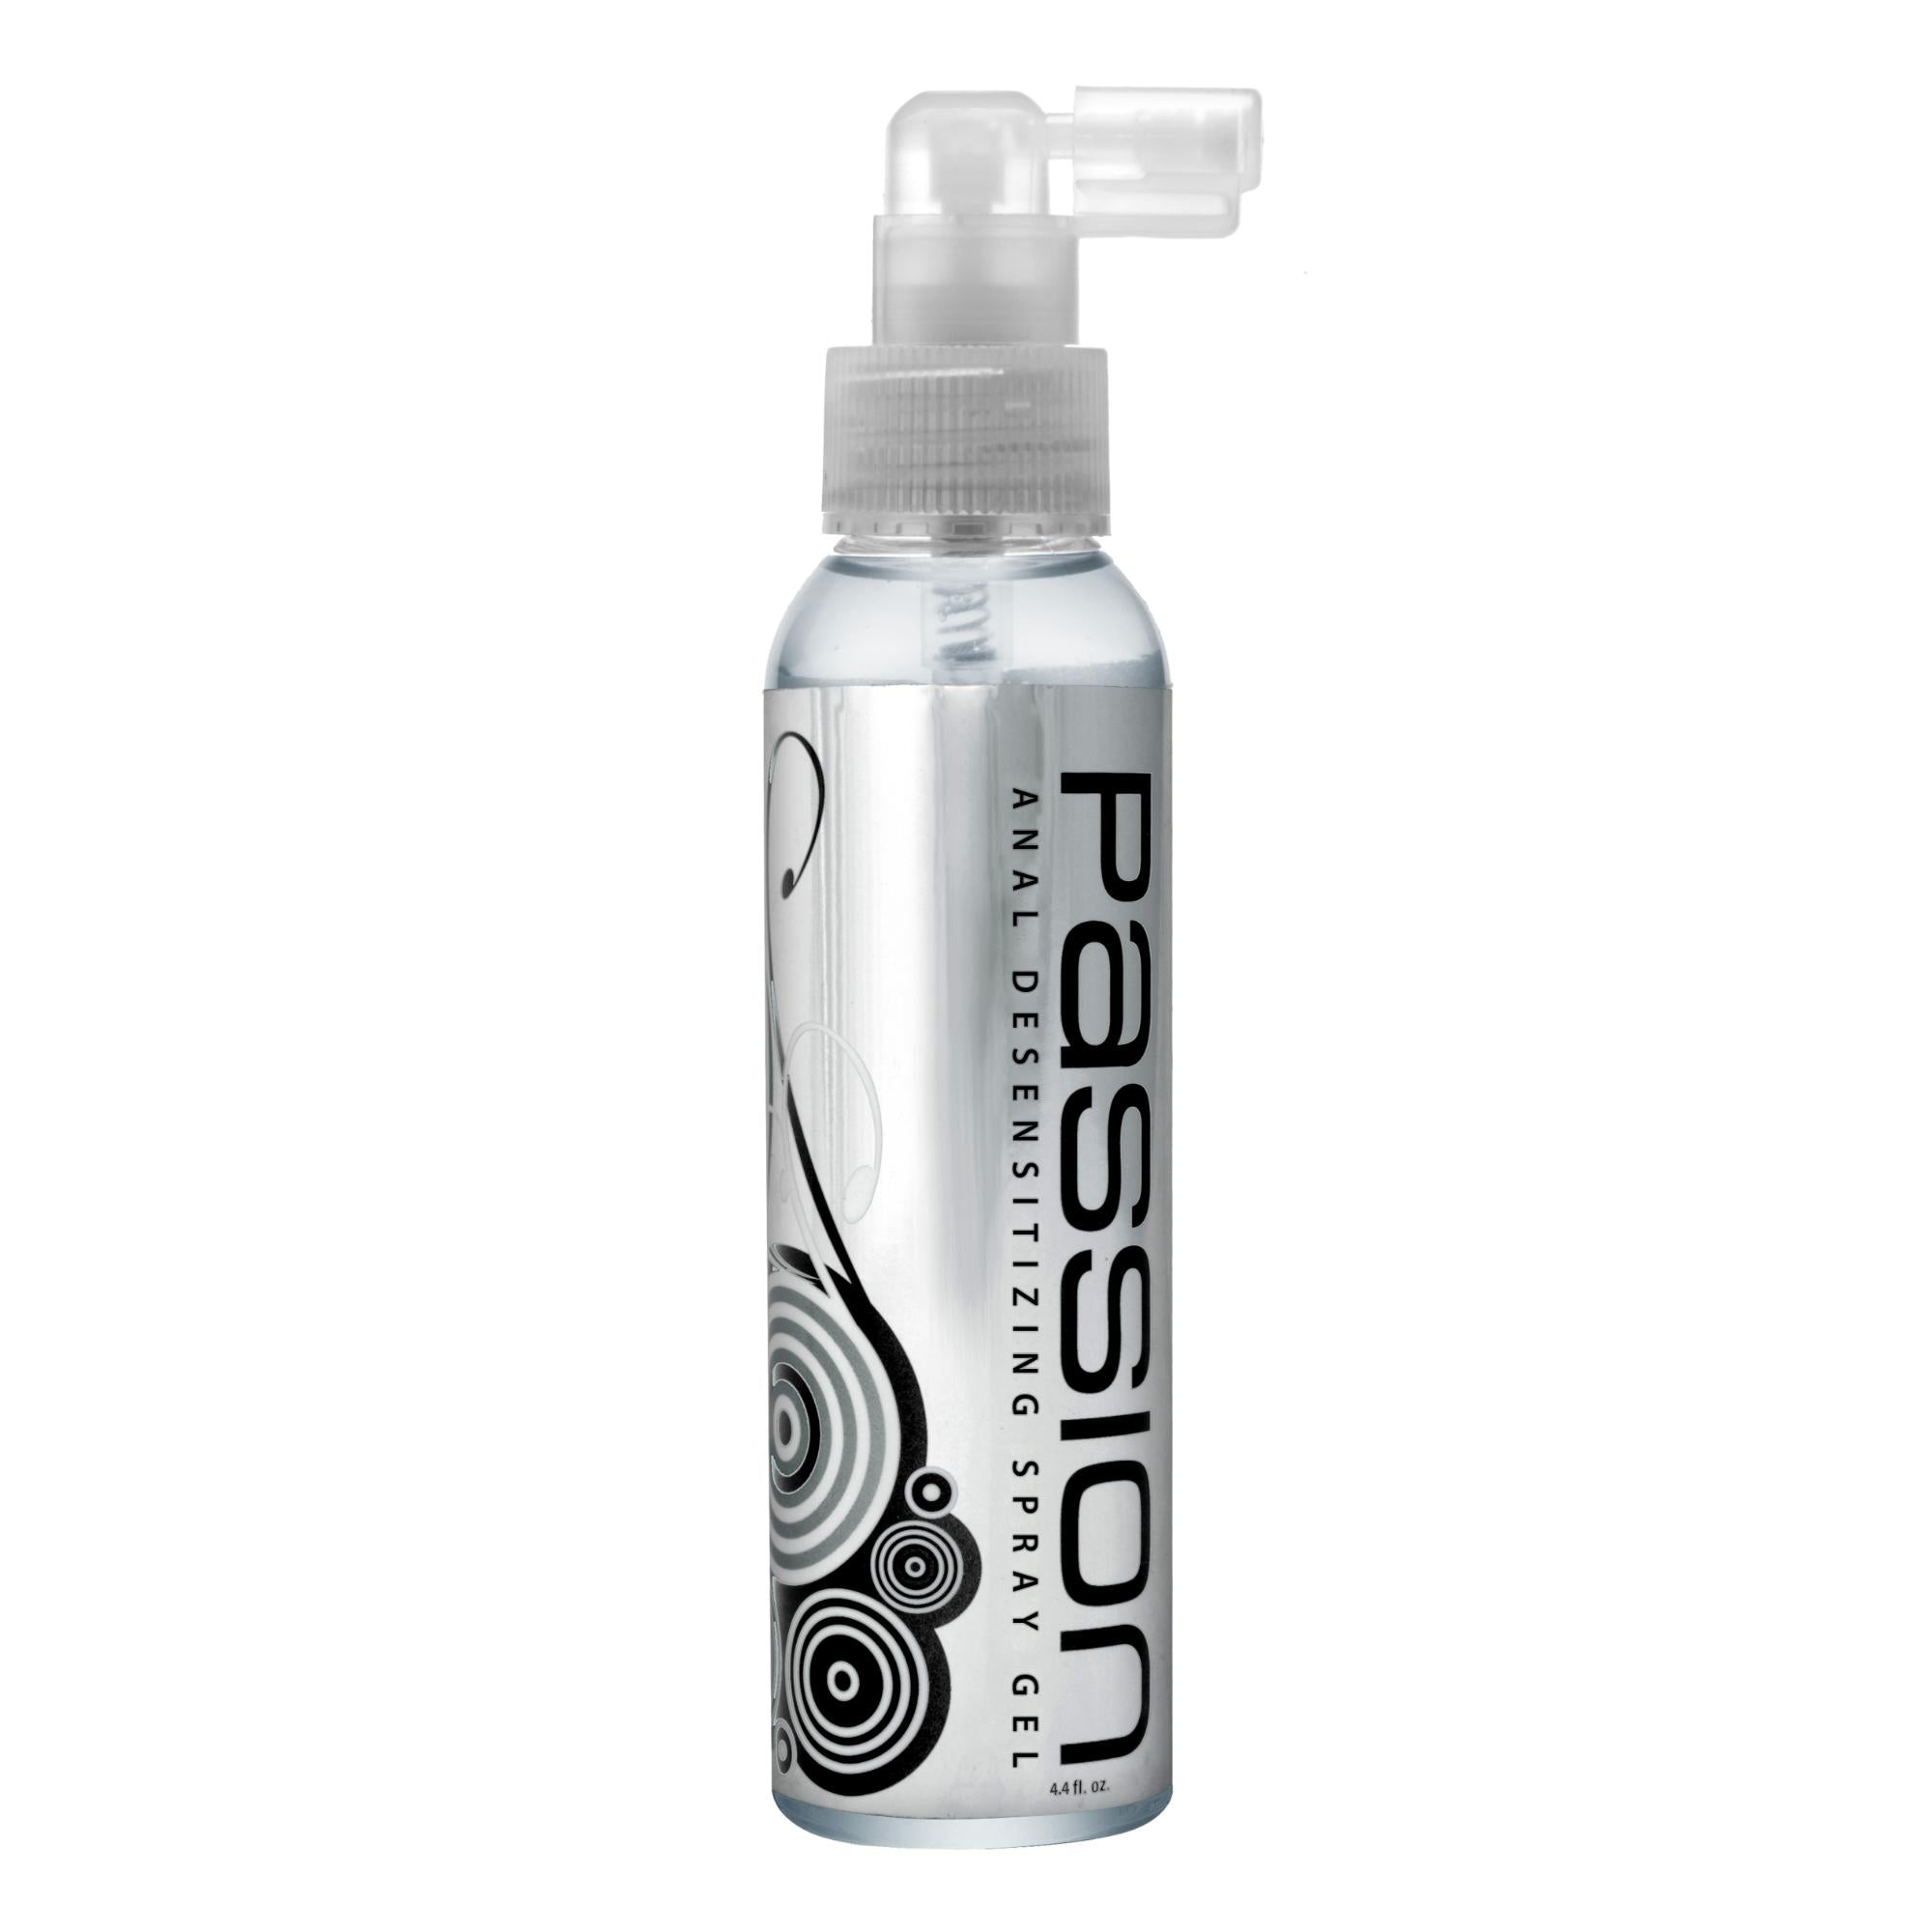 Passion Lubricants Extra Strength Anal Desensitizing Spray Gel - 4.4 oz.